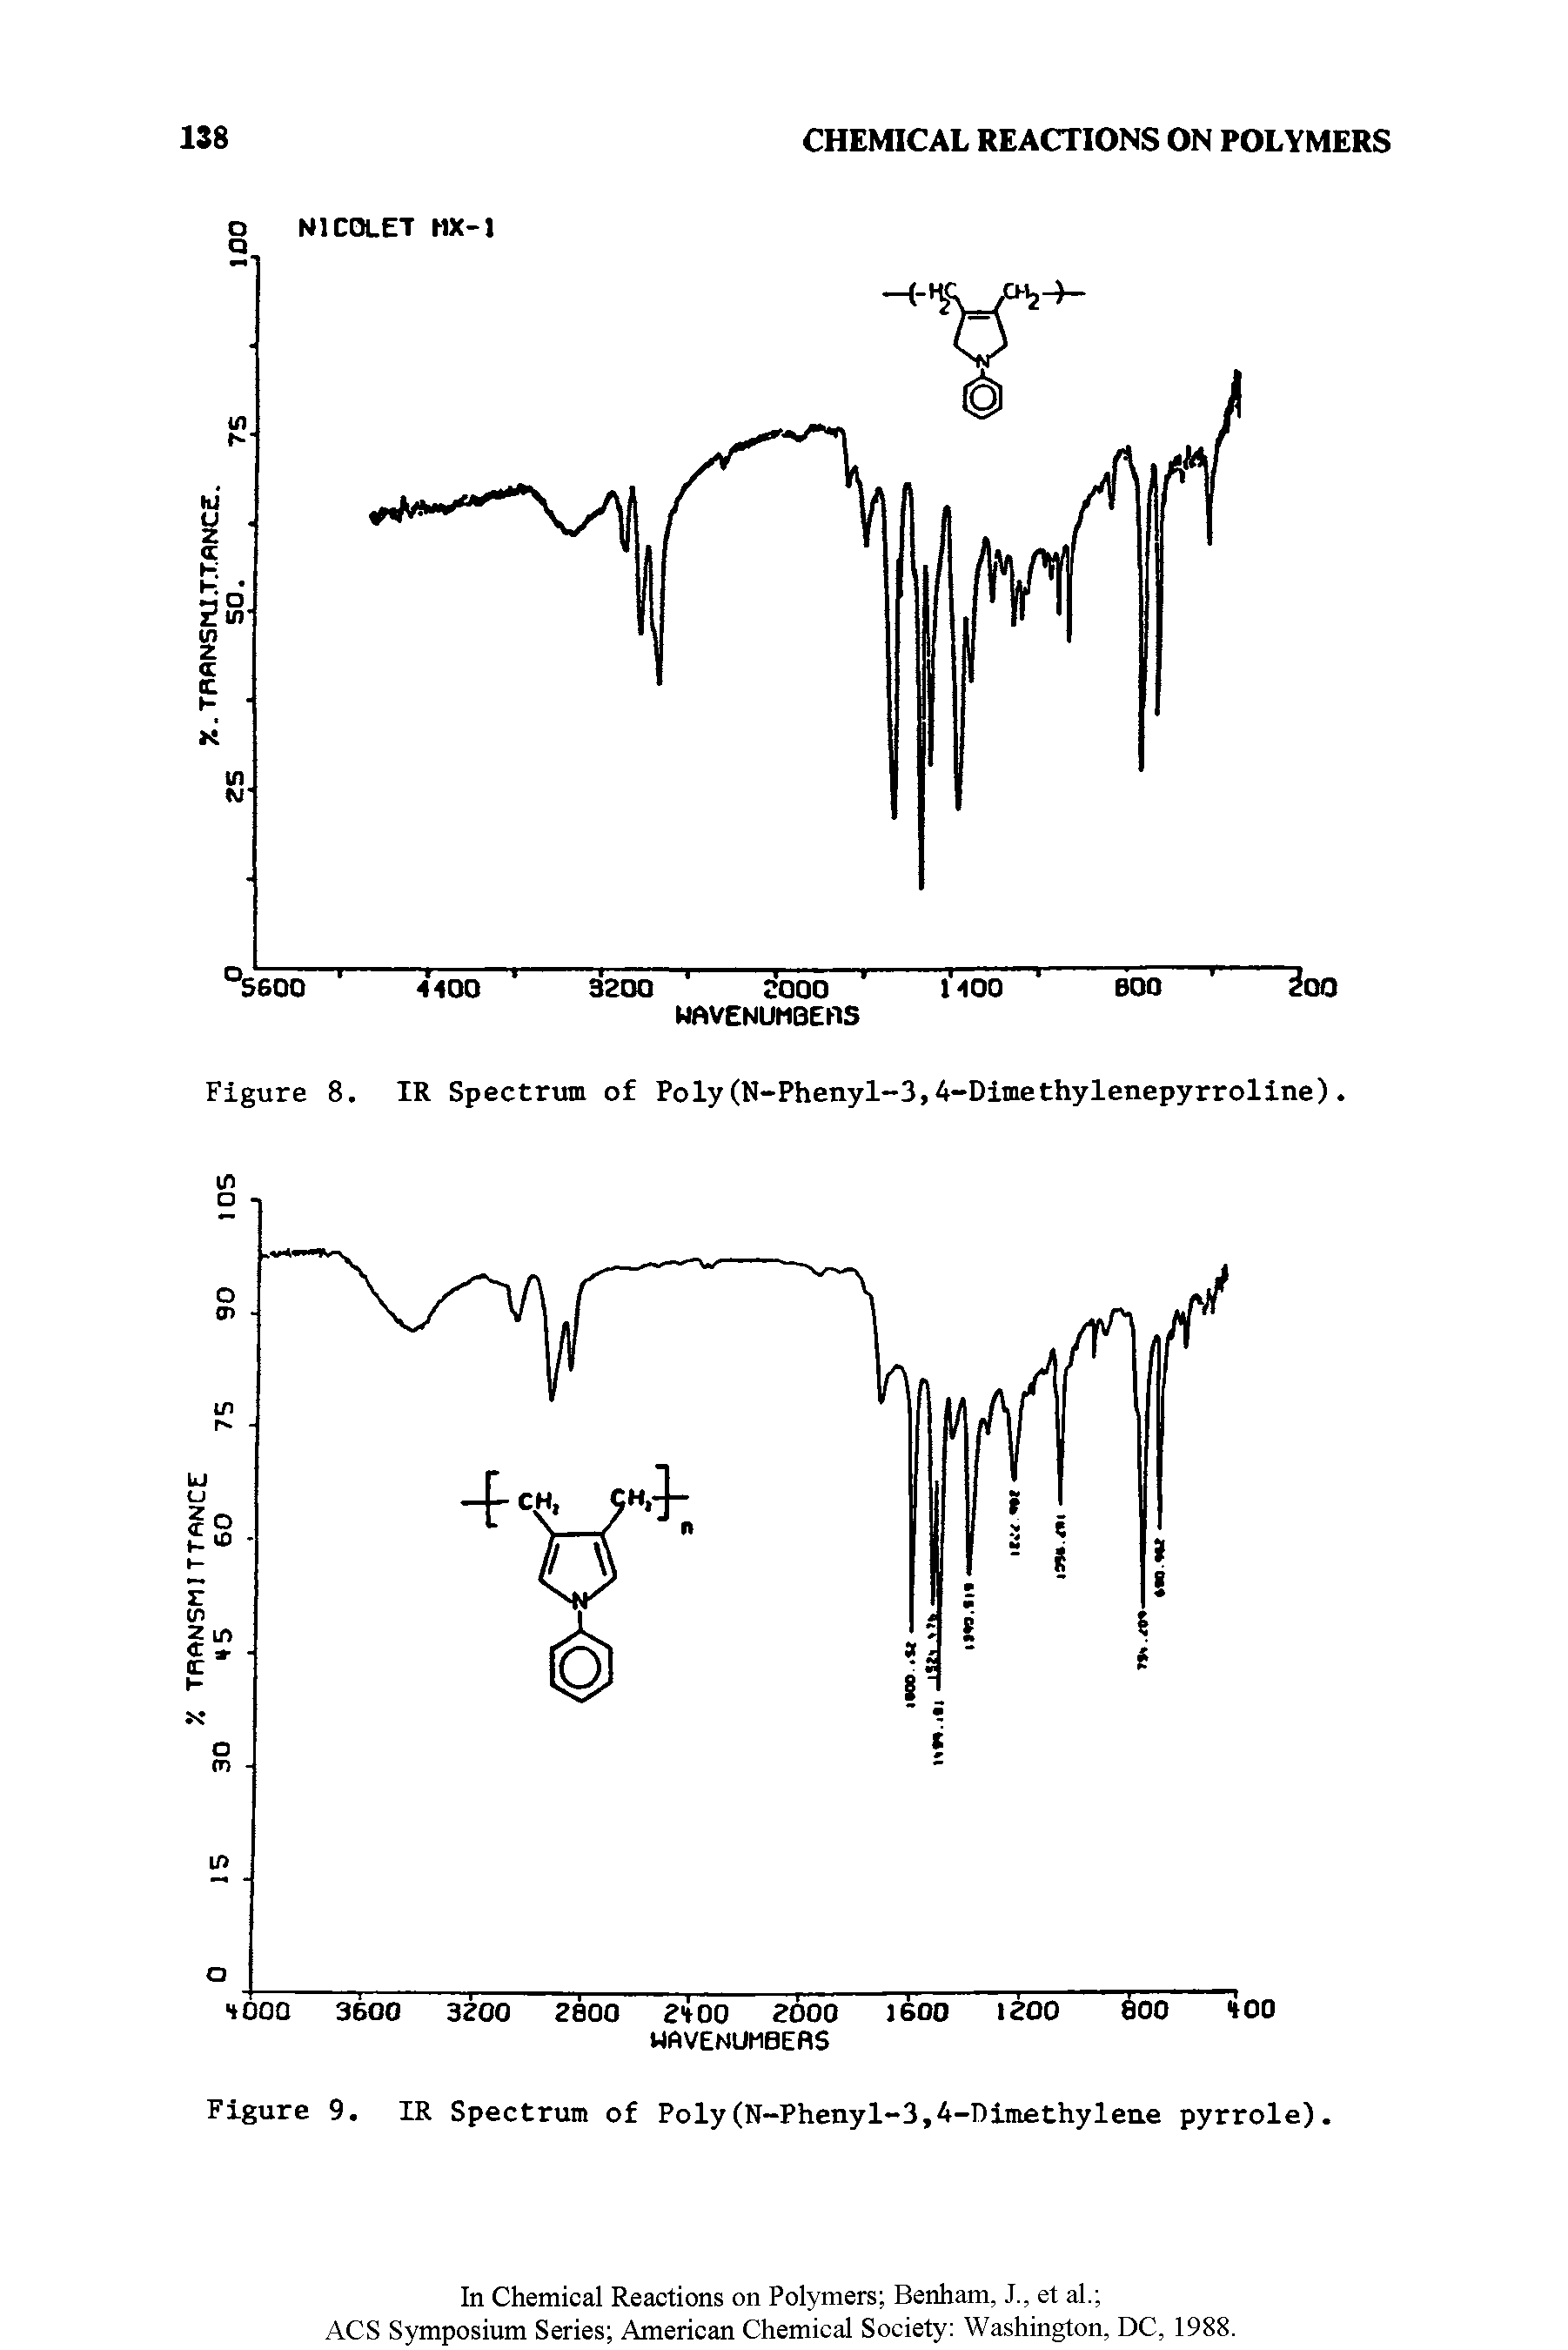 Figure 9. IR Spectrum of Poly(H-Phenyl-3,4-Dimethylene pyrrole).